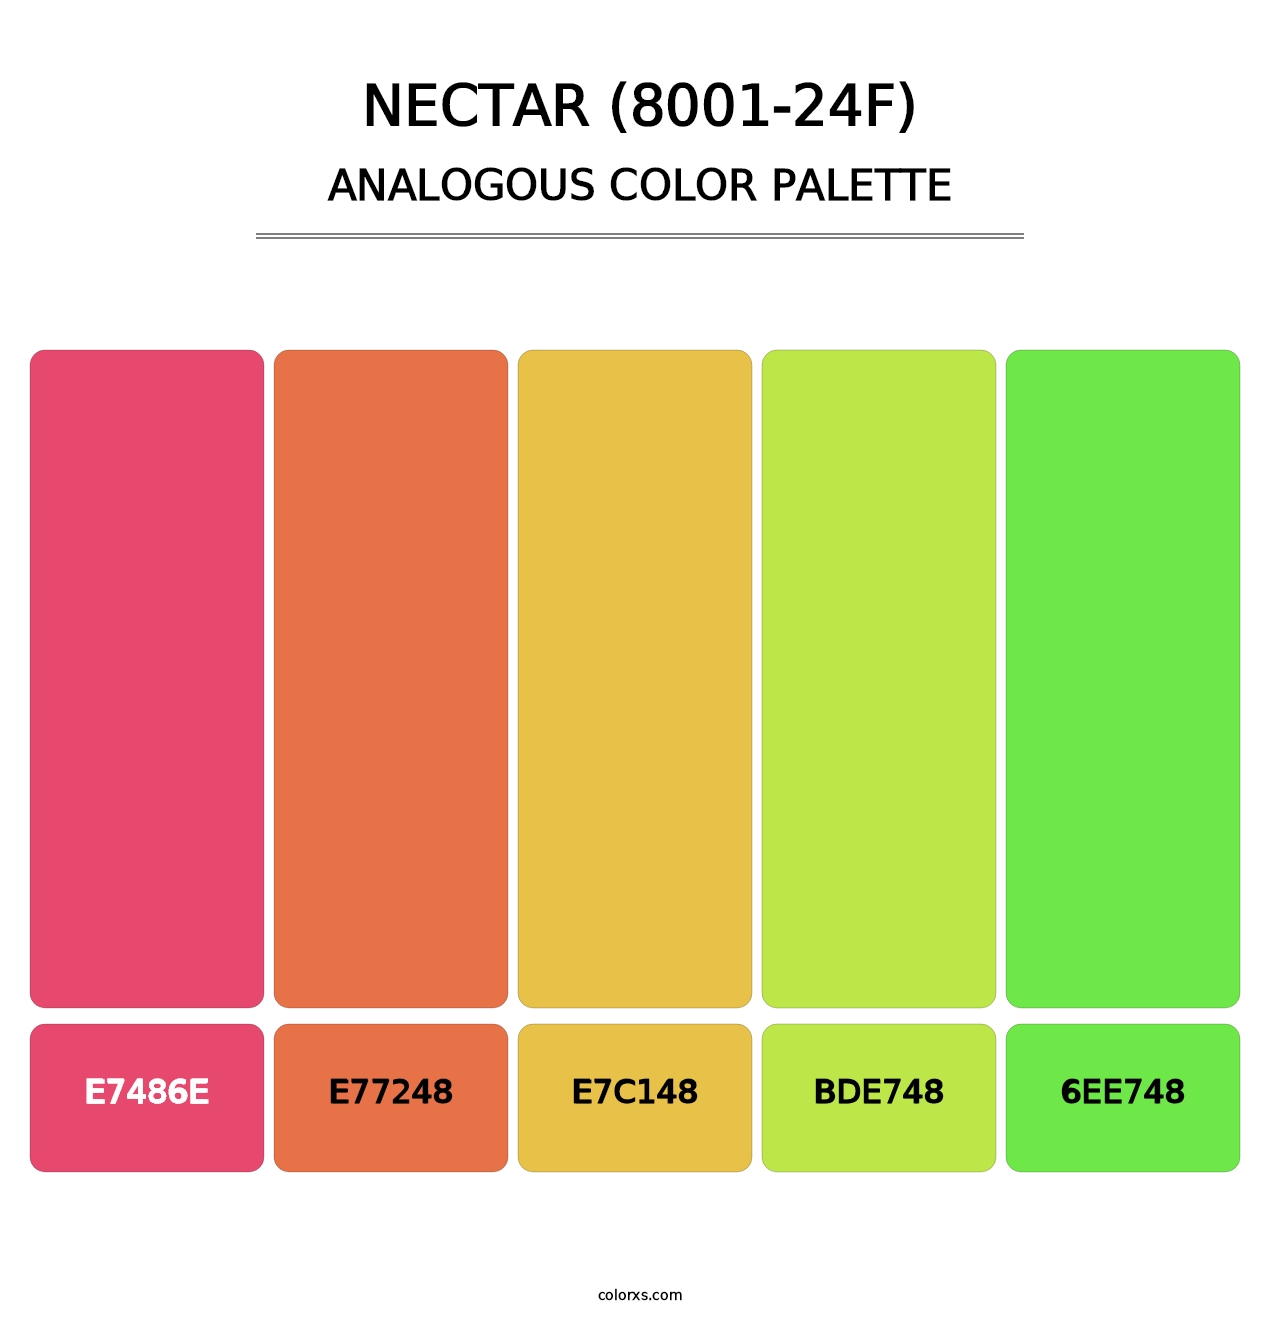 Nectar (8001-24F) - Analogous Color Palette